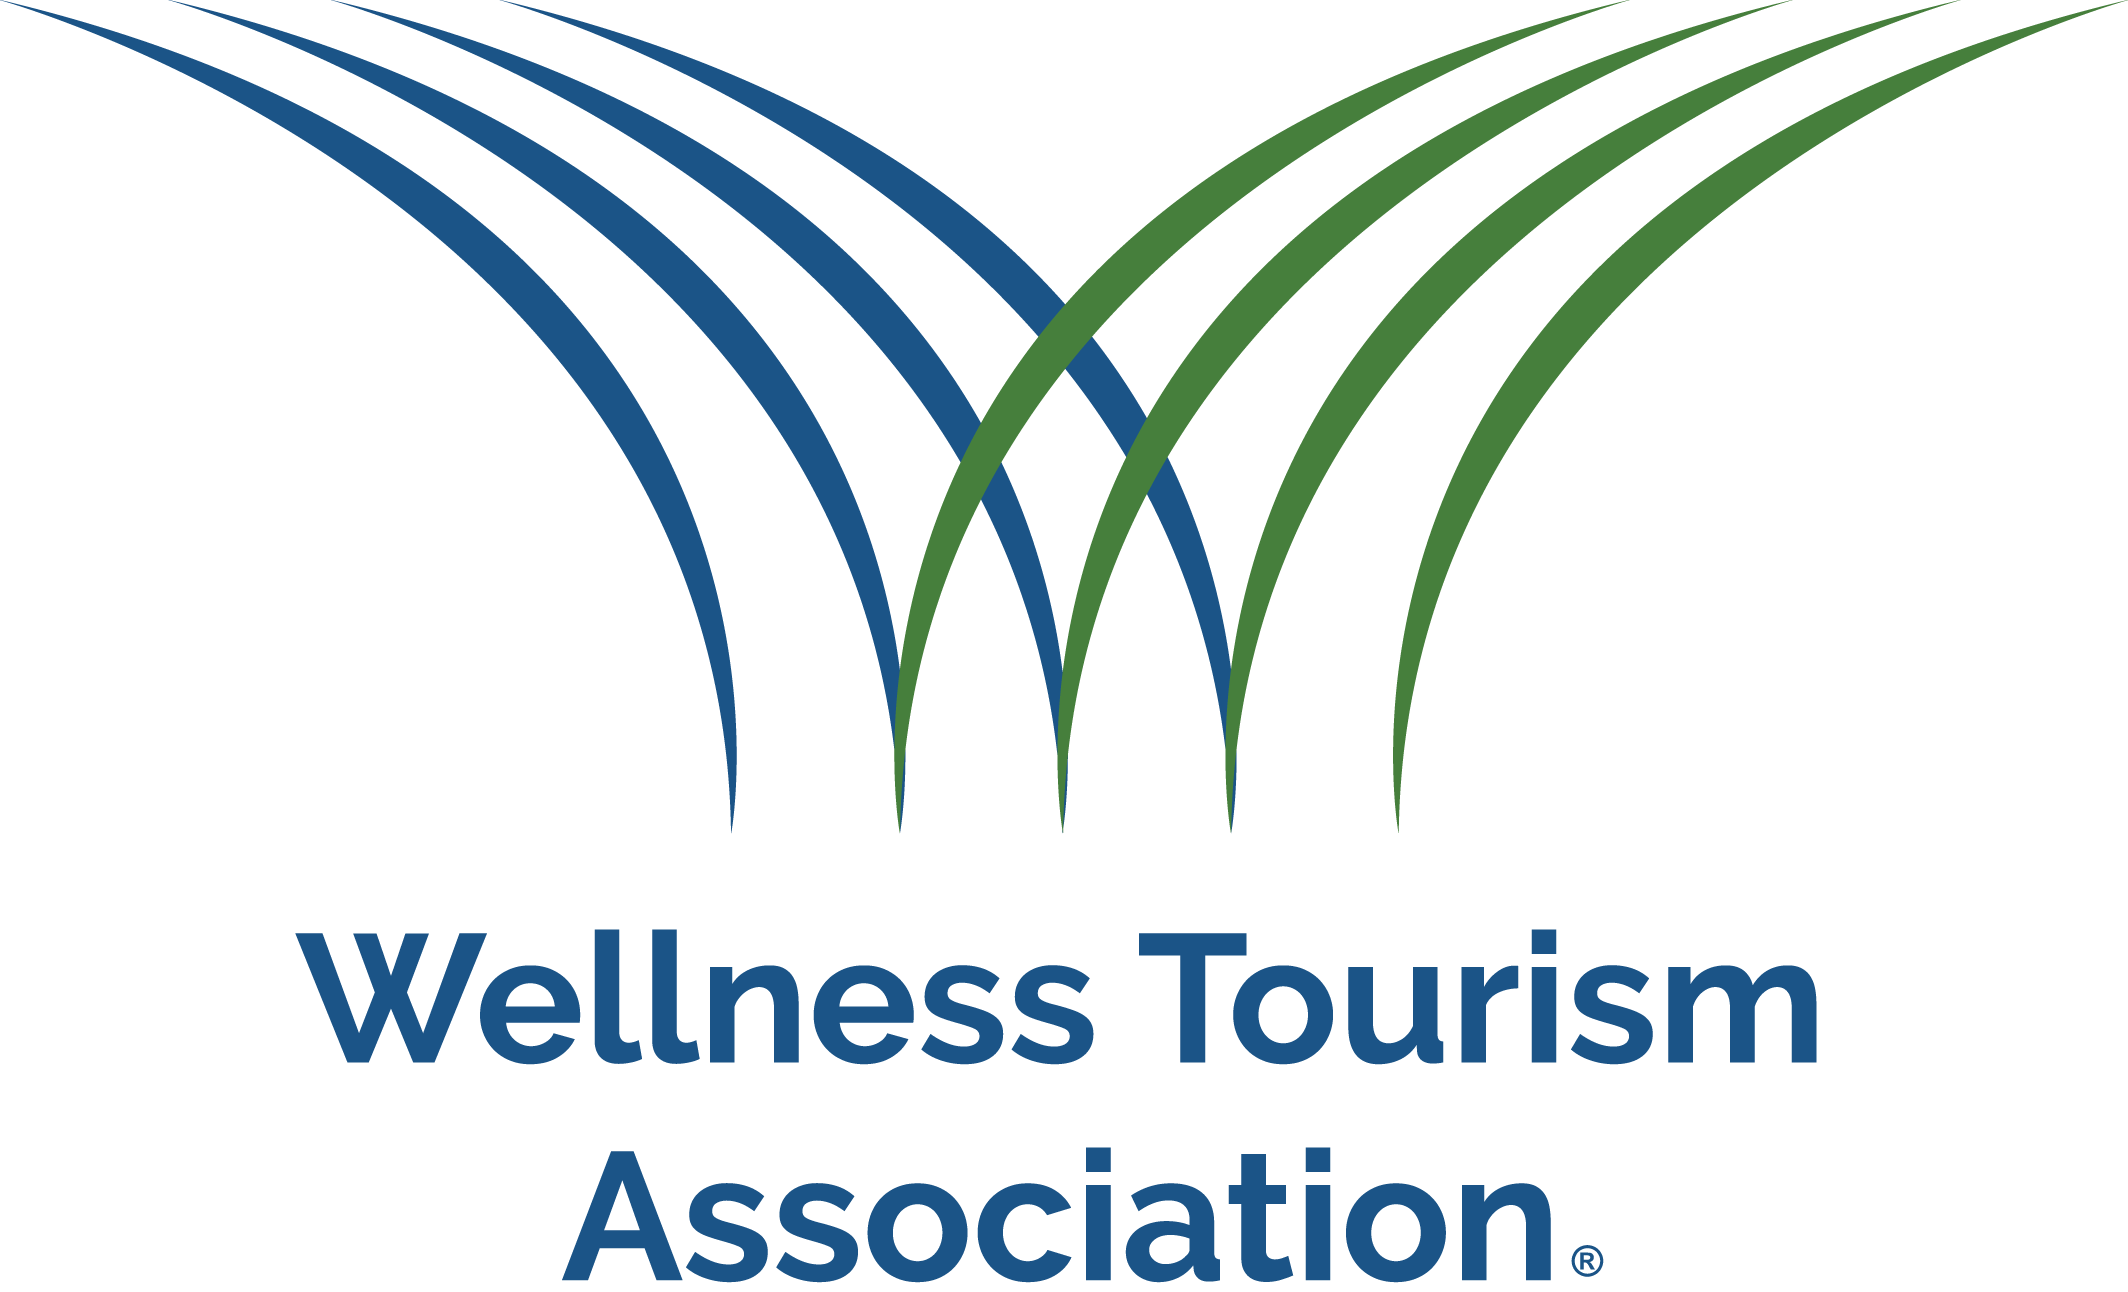 Wellness Tourism Association logo large